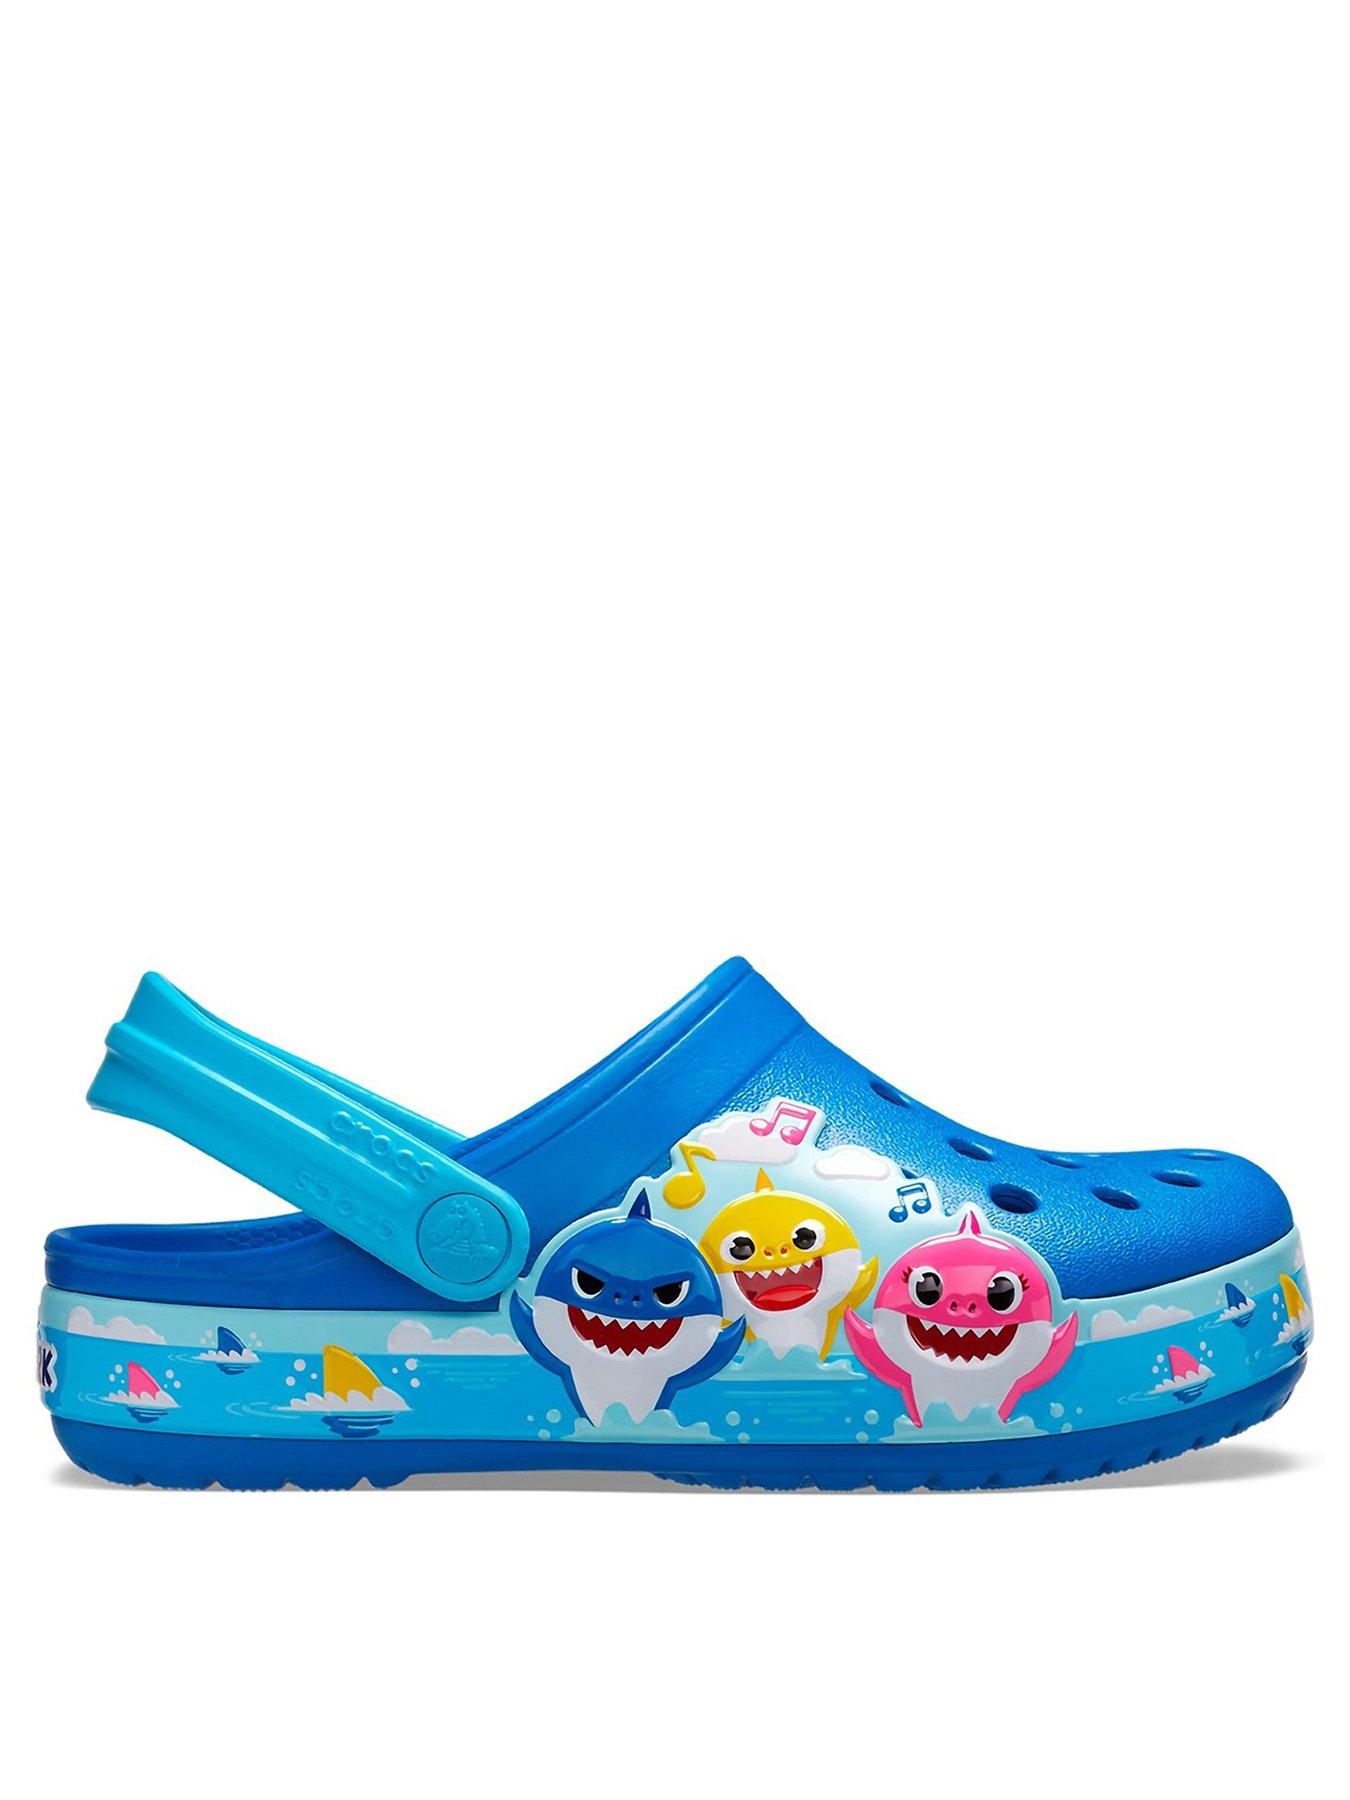 12-13 10-11 Crocs New Kids Clogs Infants Boys Girls Shoes Sandals UK Sizes 4-5 